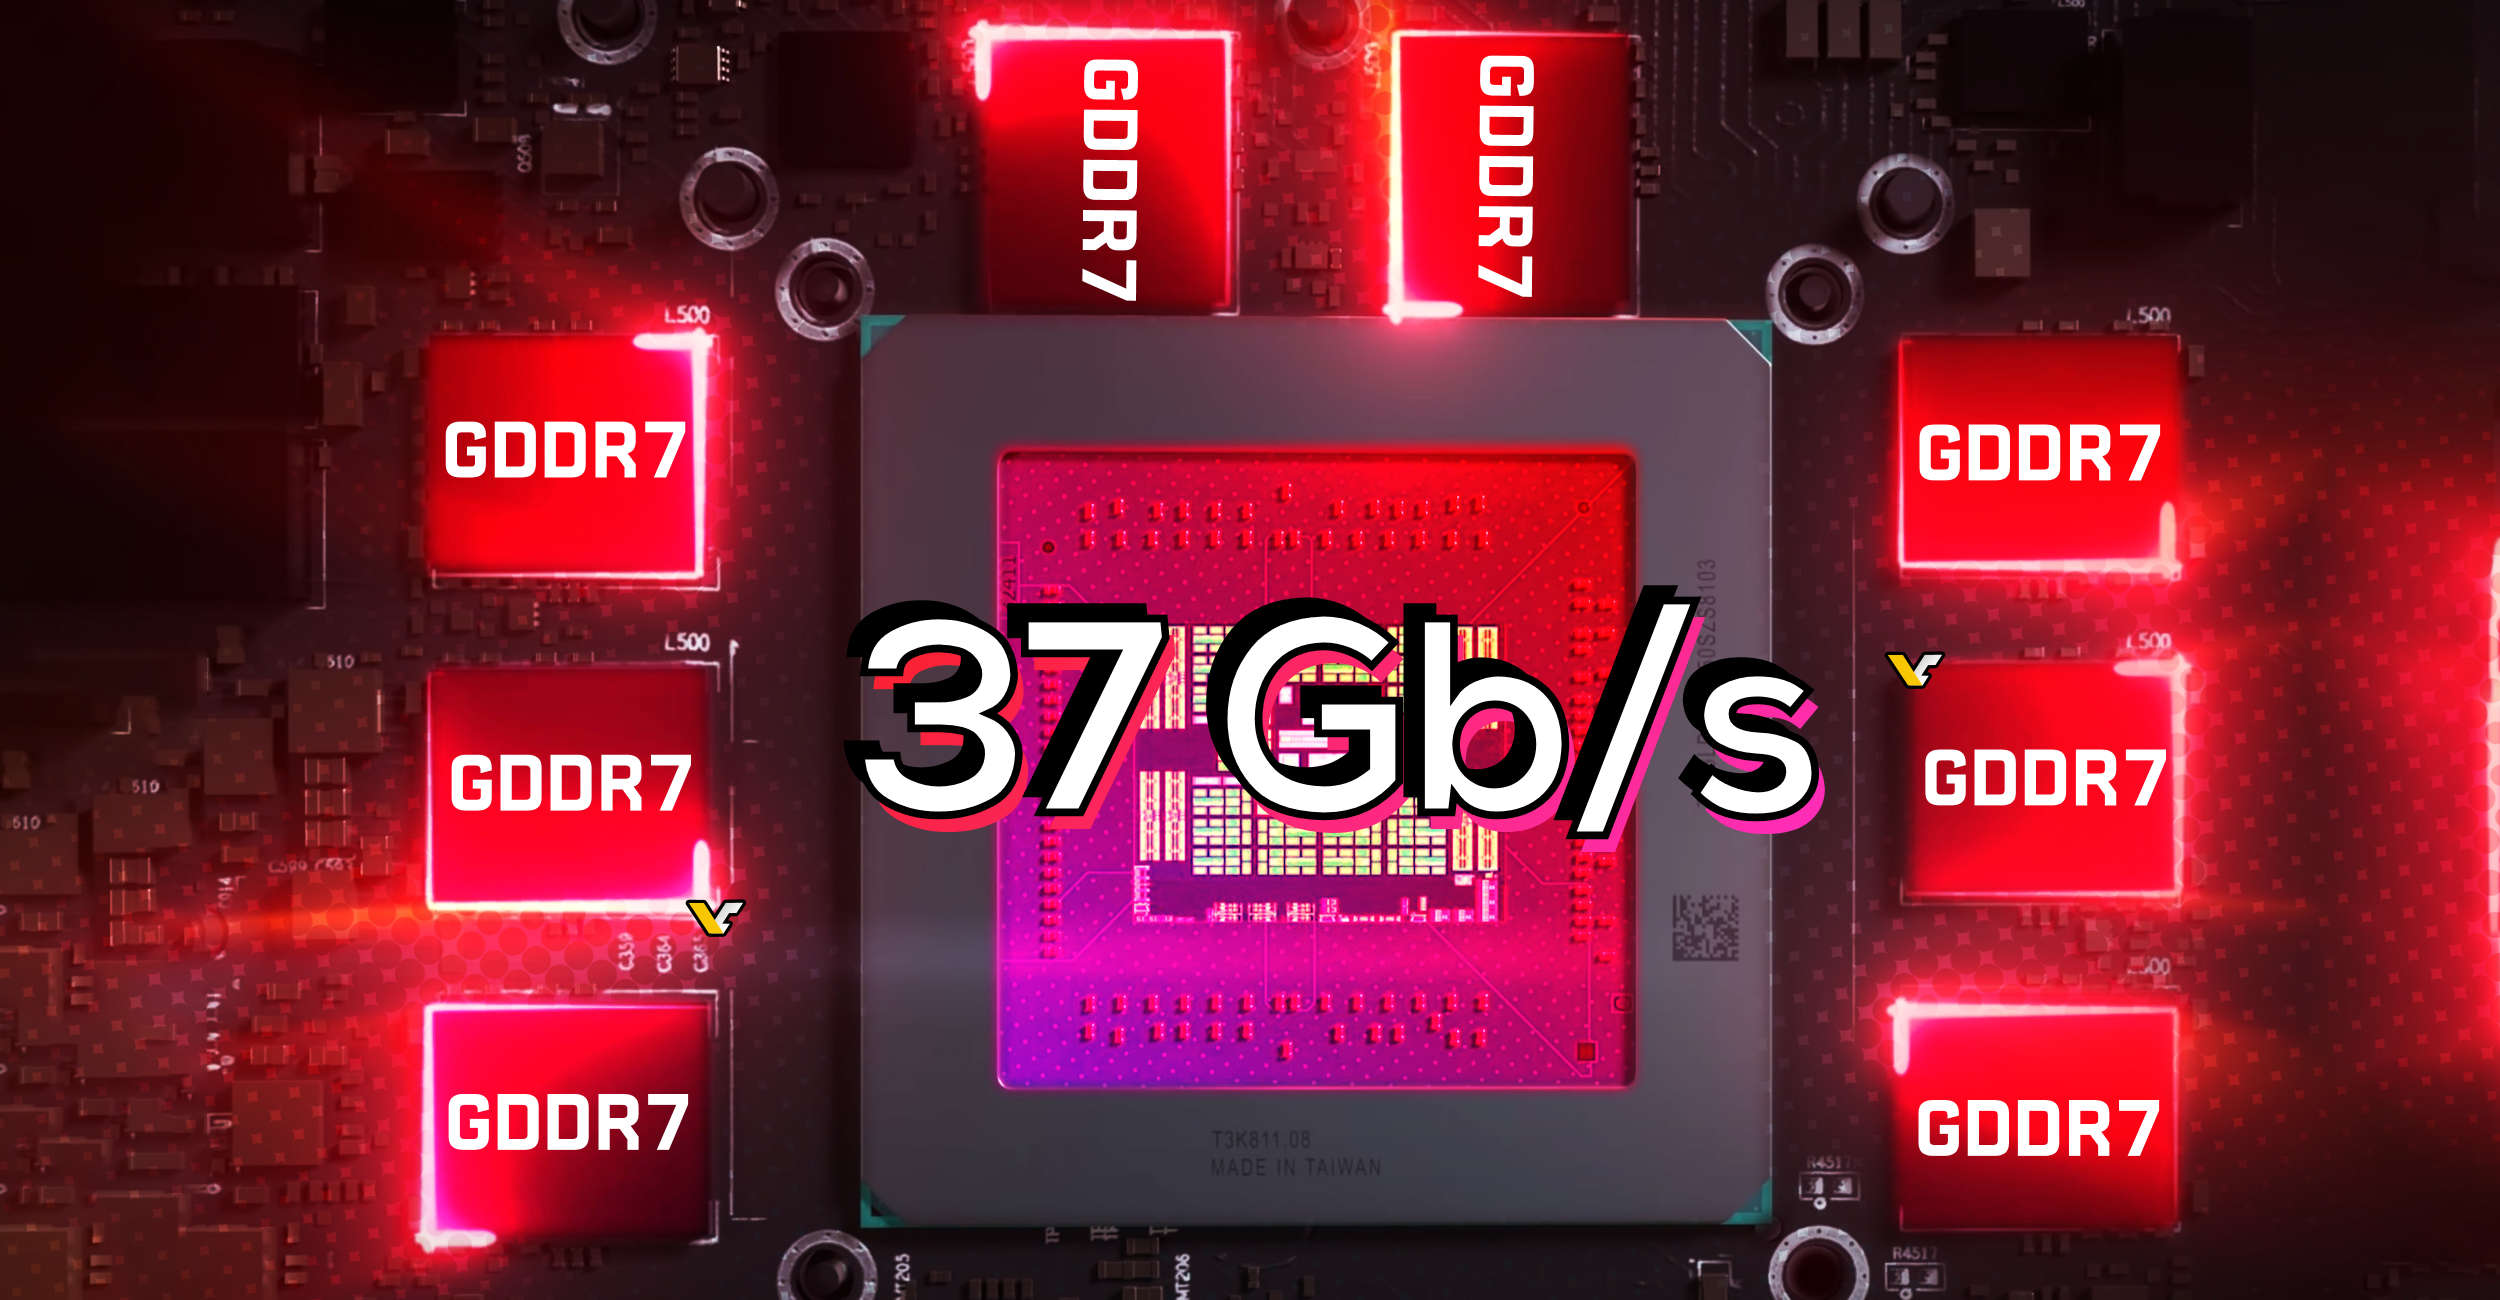 Micron unveils world's highest capacity microSD card with 1.5TB